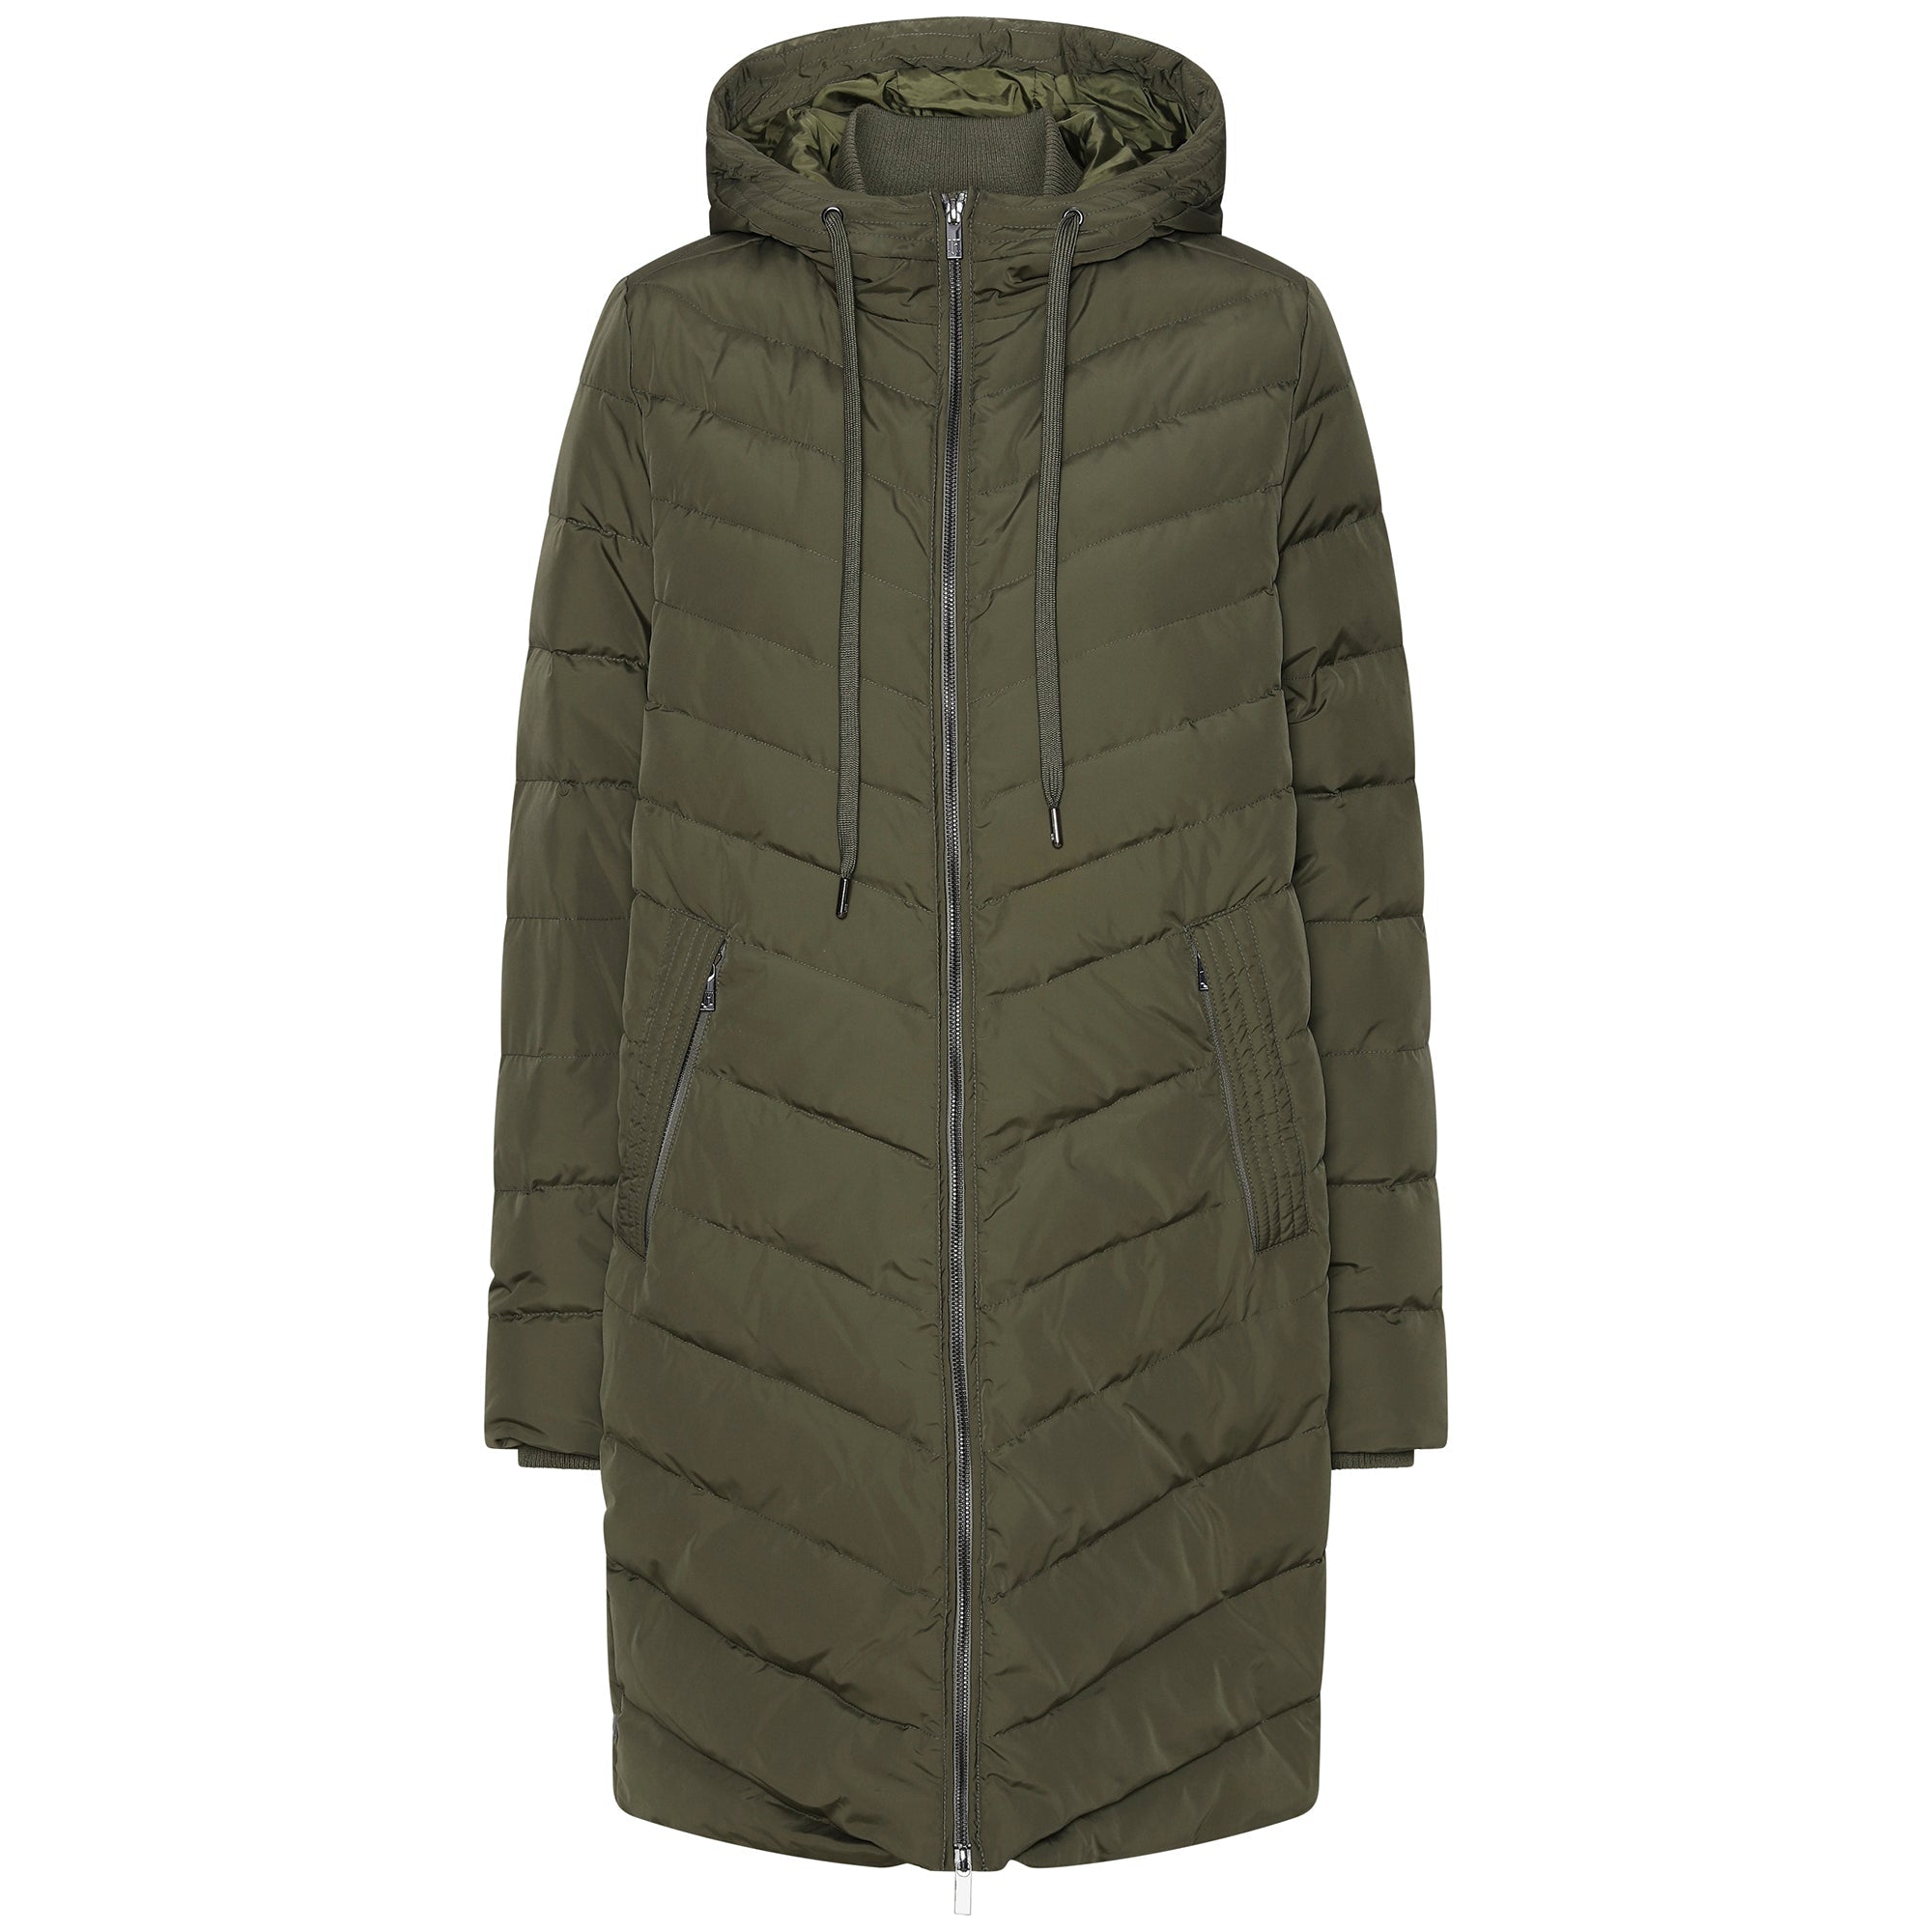 Winter coat PEPPY01 - 410 Army | Army